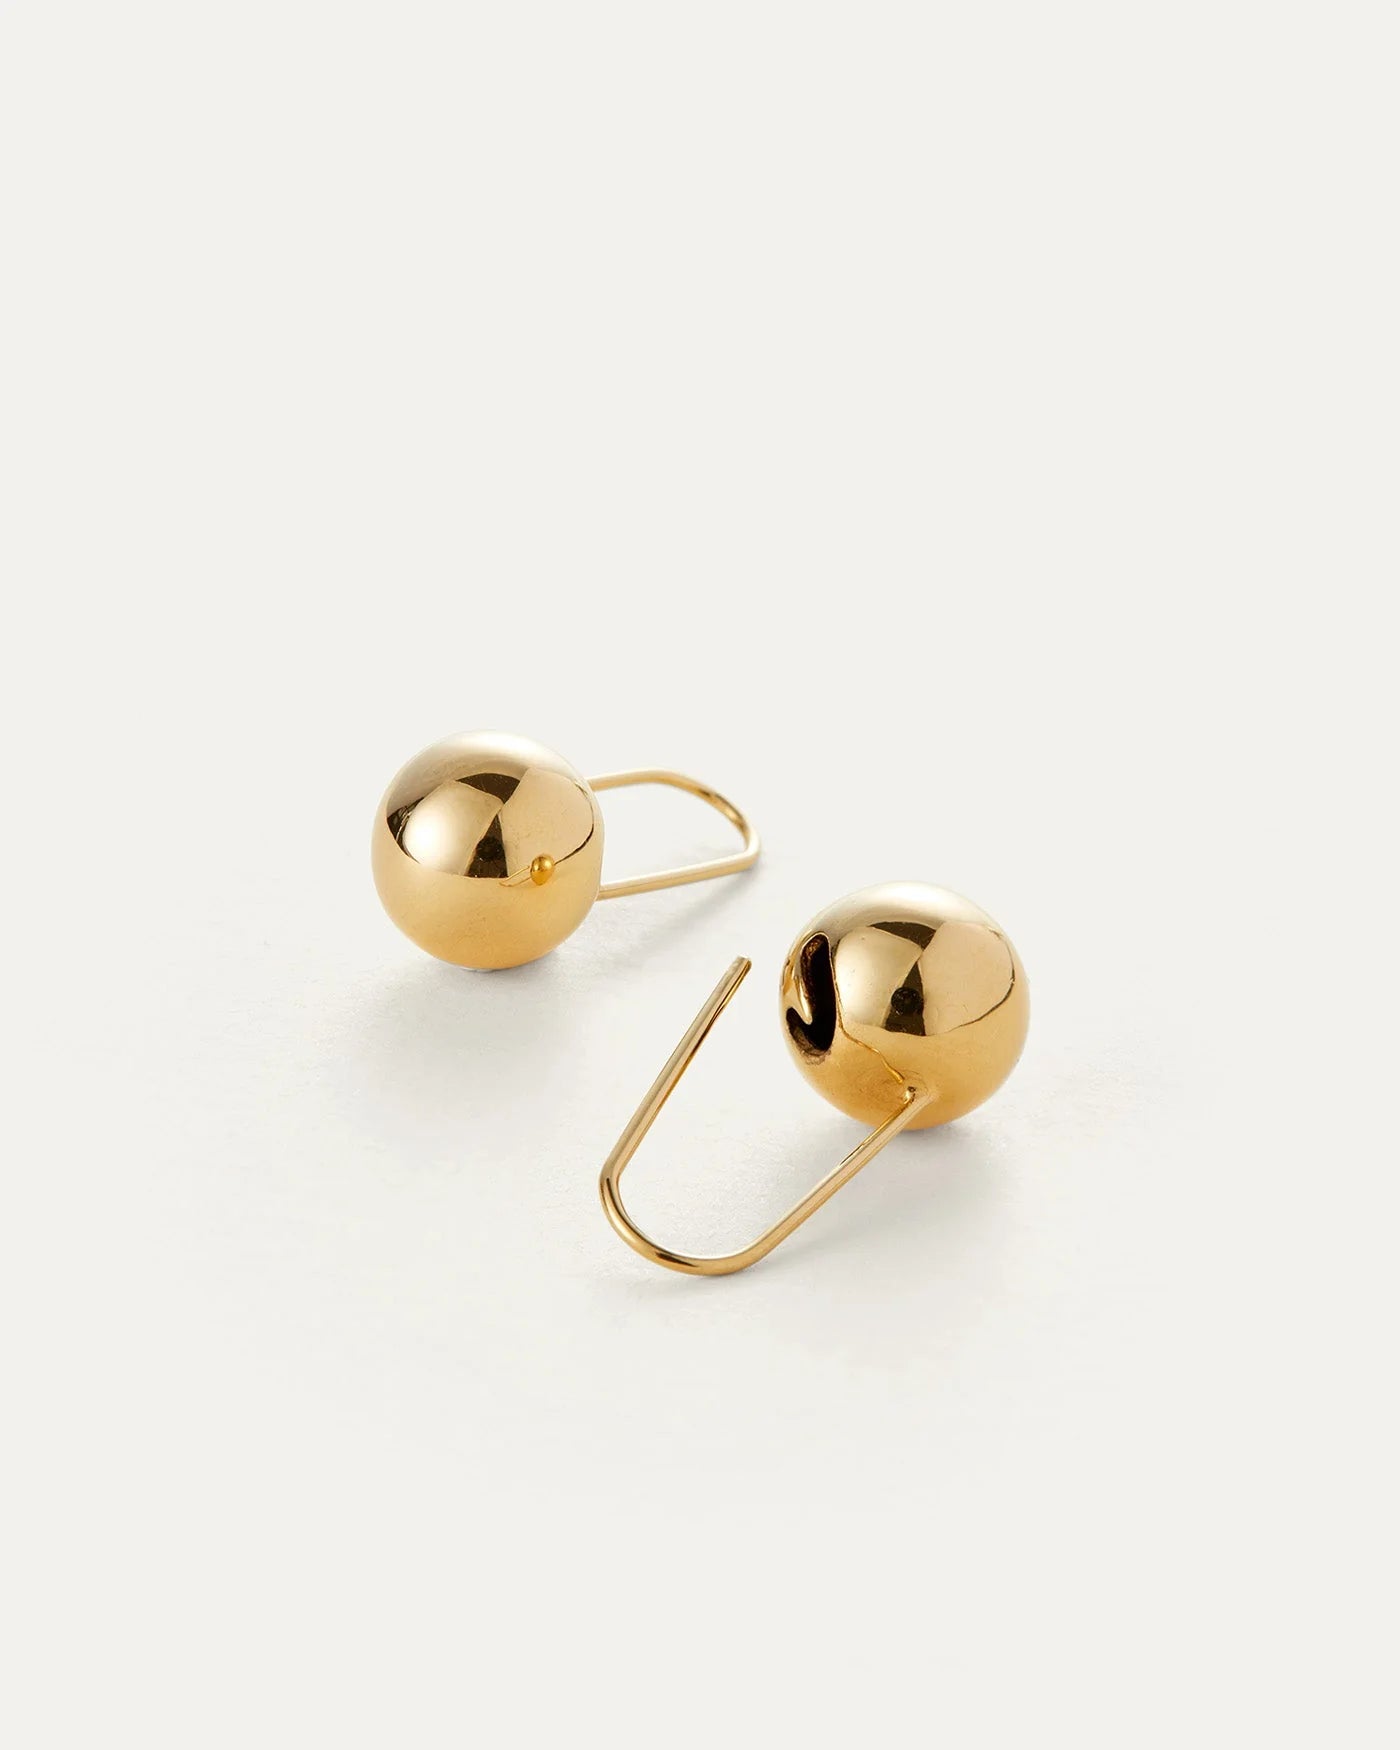 Celeste Earrings in Gold